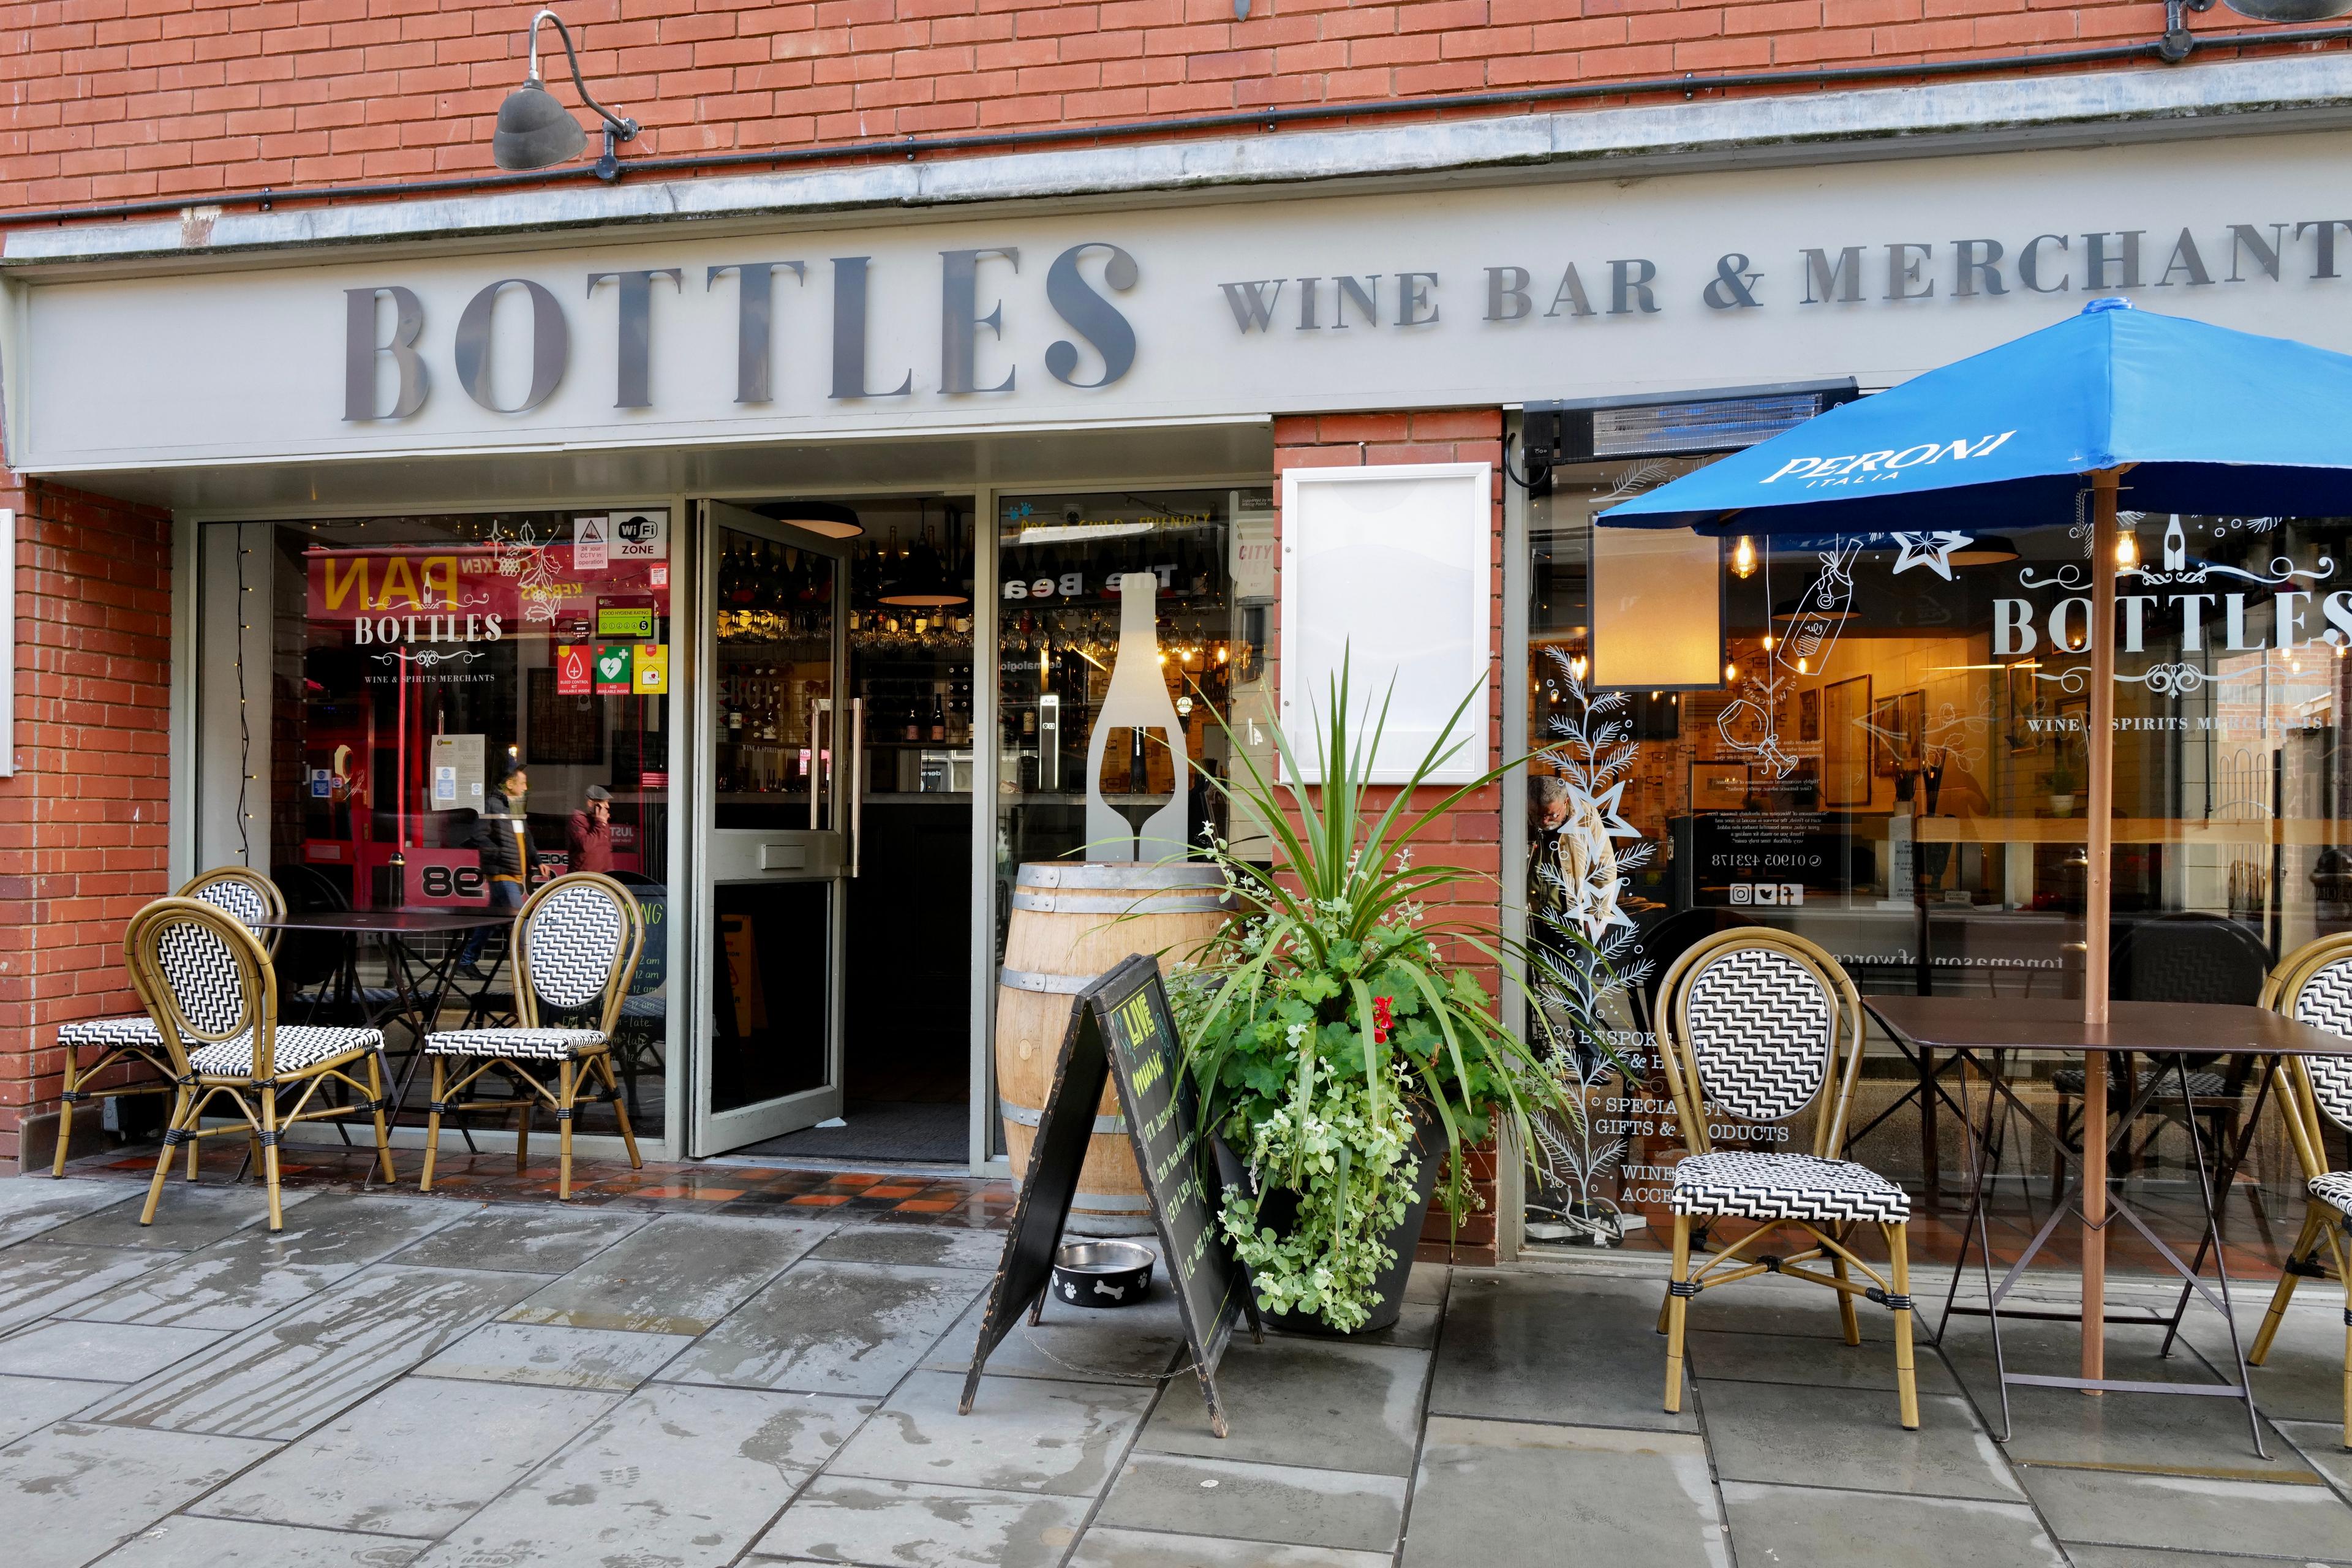 The Patio At Bottles Wine Bar, Bottles Wine Bar & Merchants photo #1